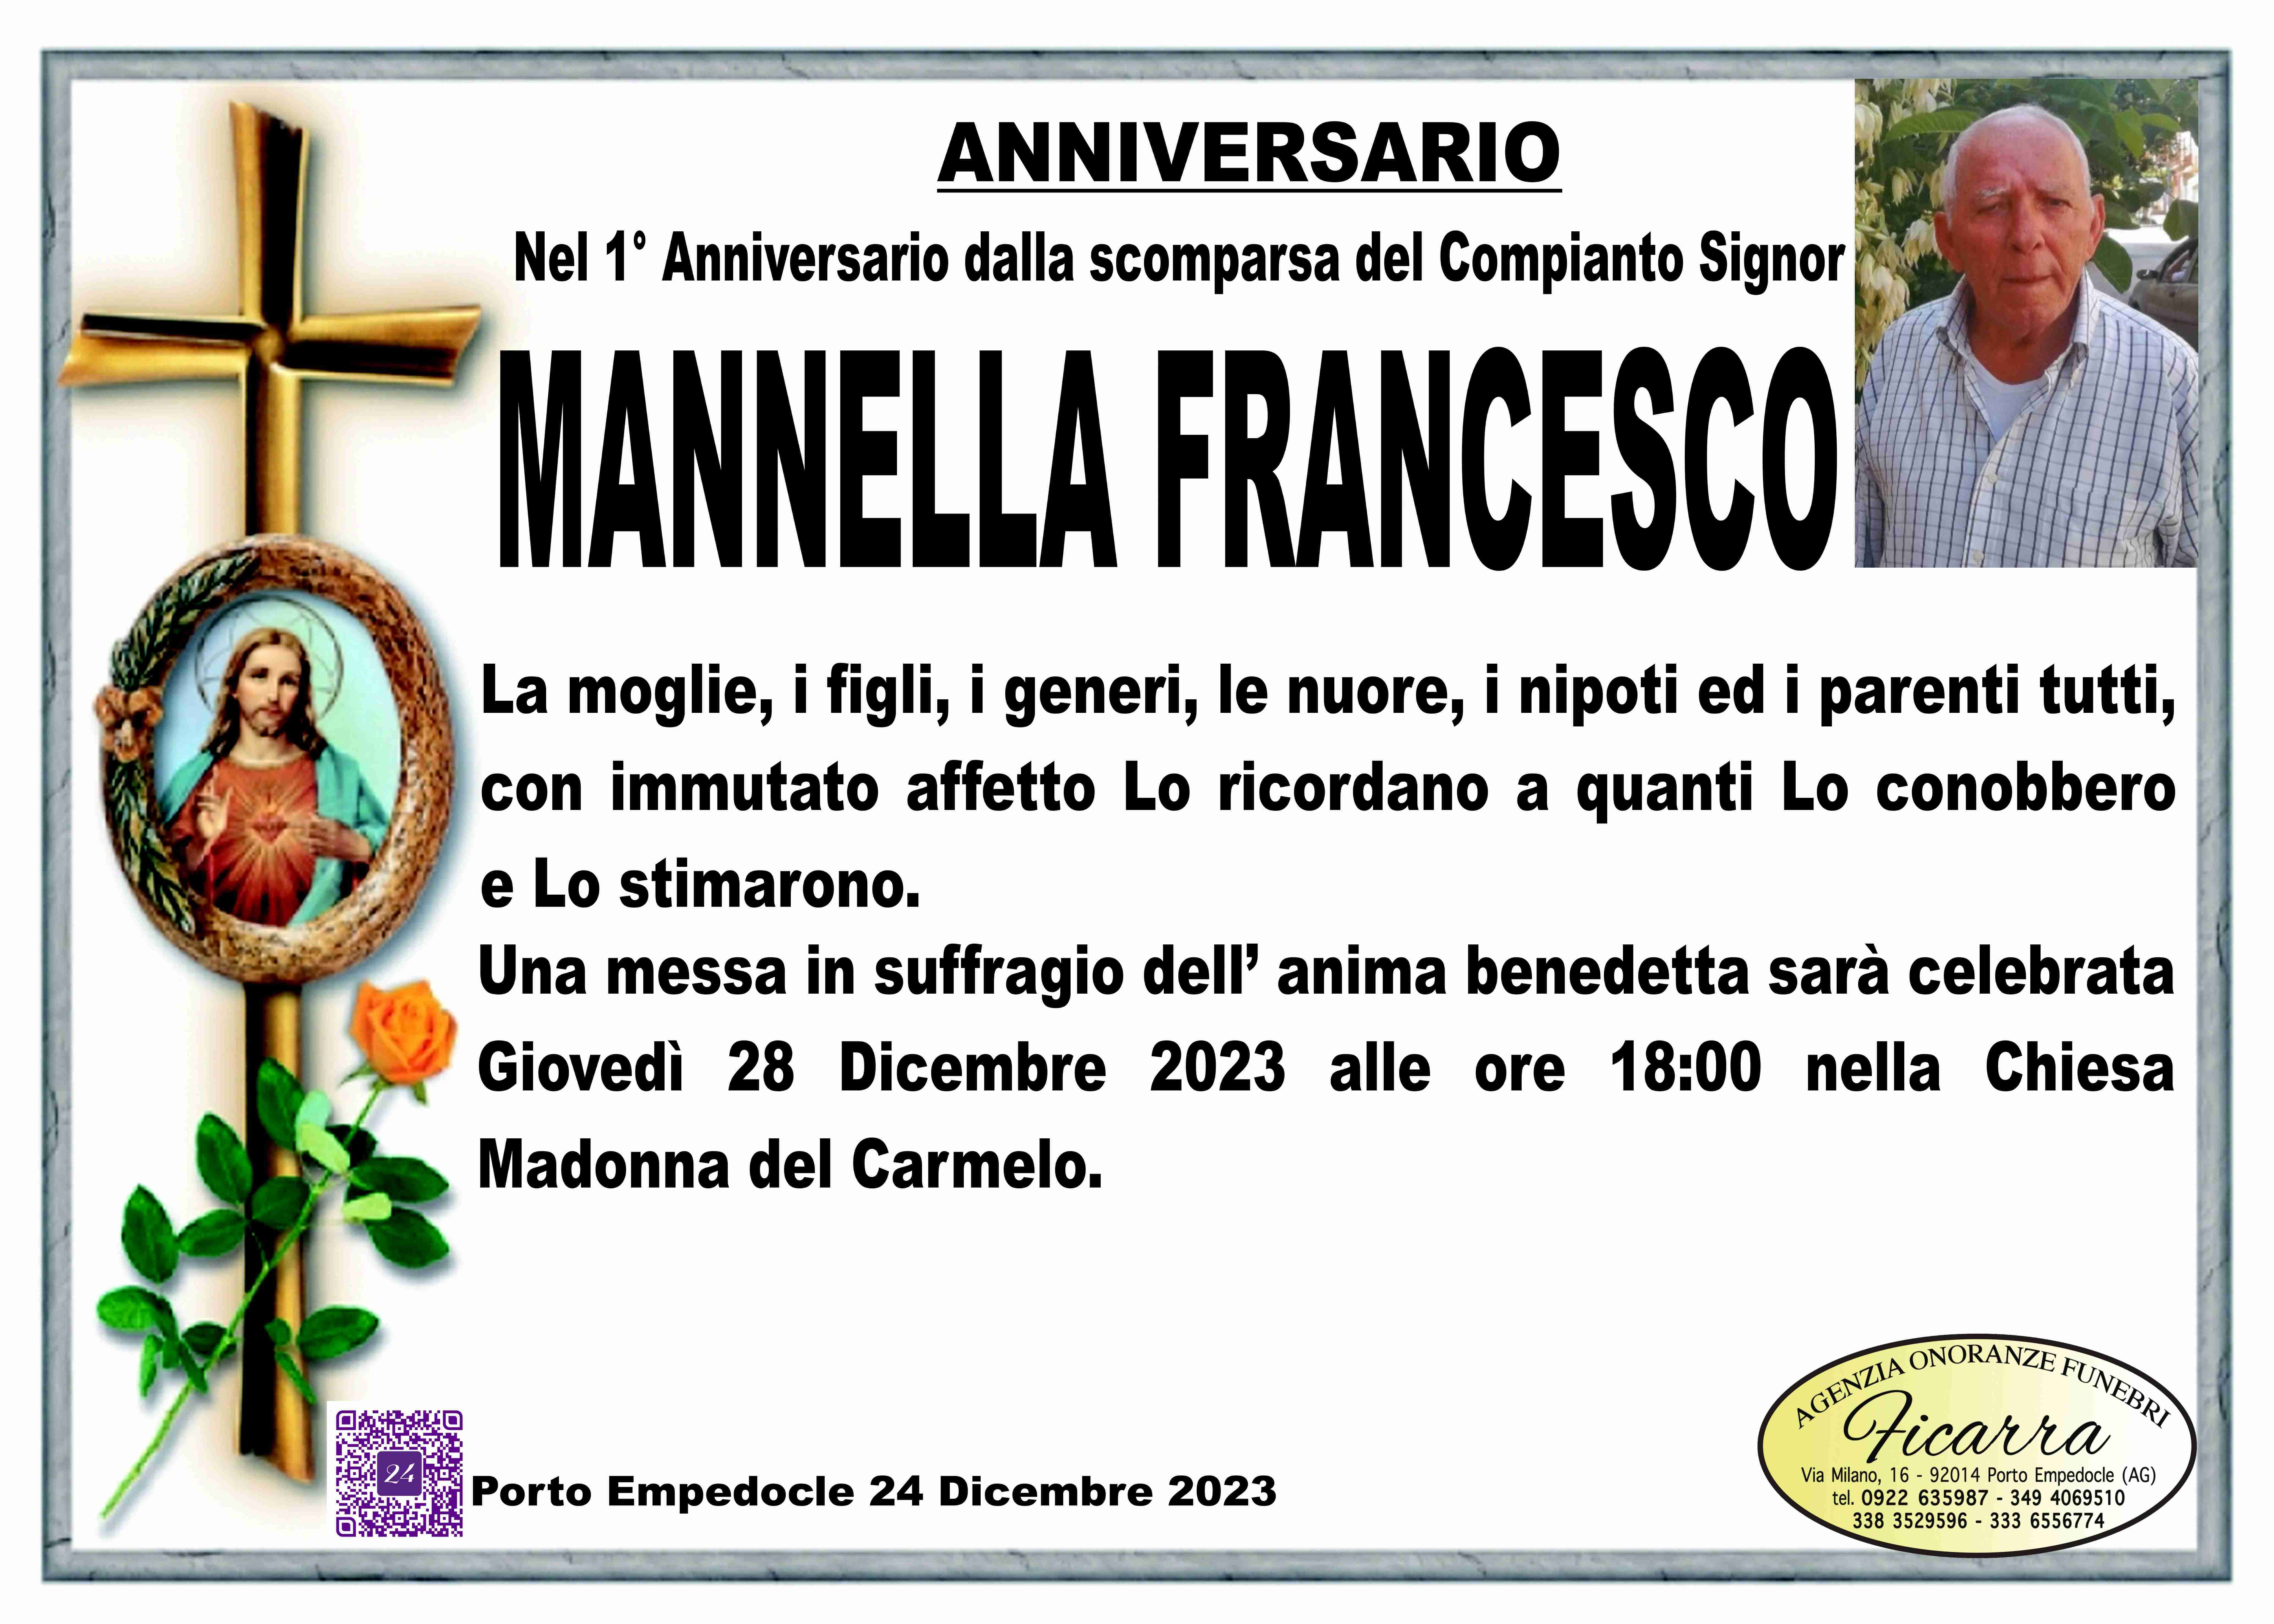 Francesco Mannella